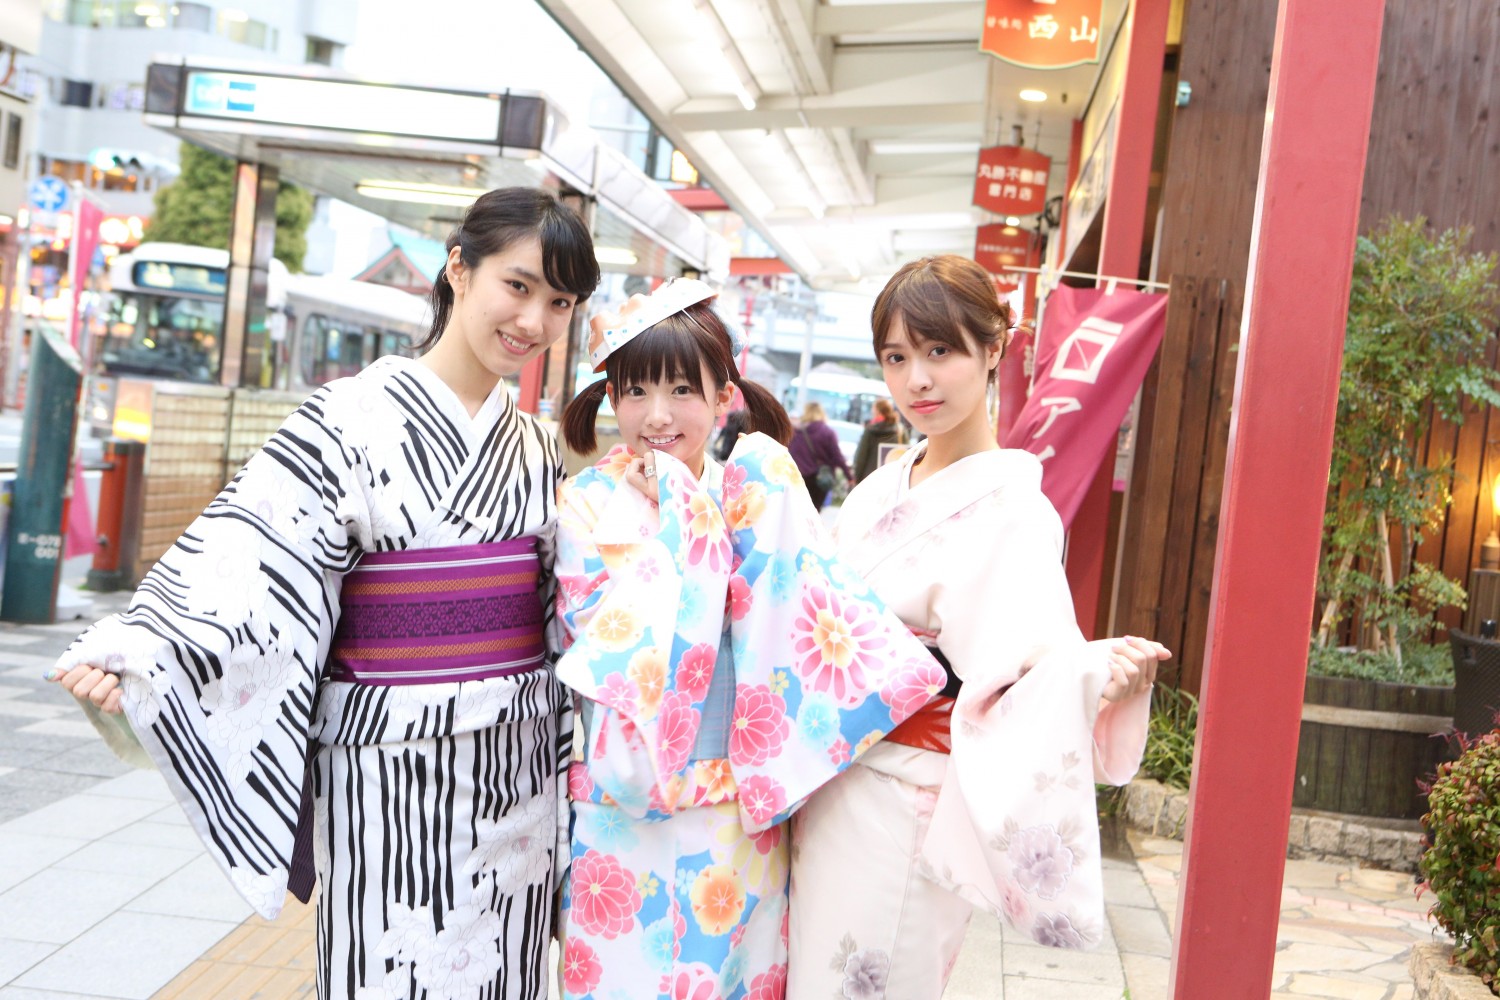 Make the Ordinary Asakusa Tour Even More Enjoyable! Experience Wearing Kimono at KOTO!